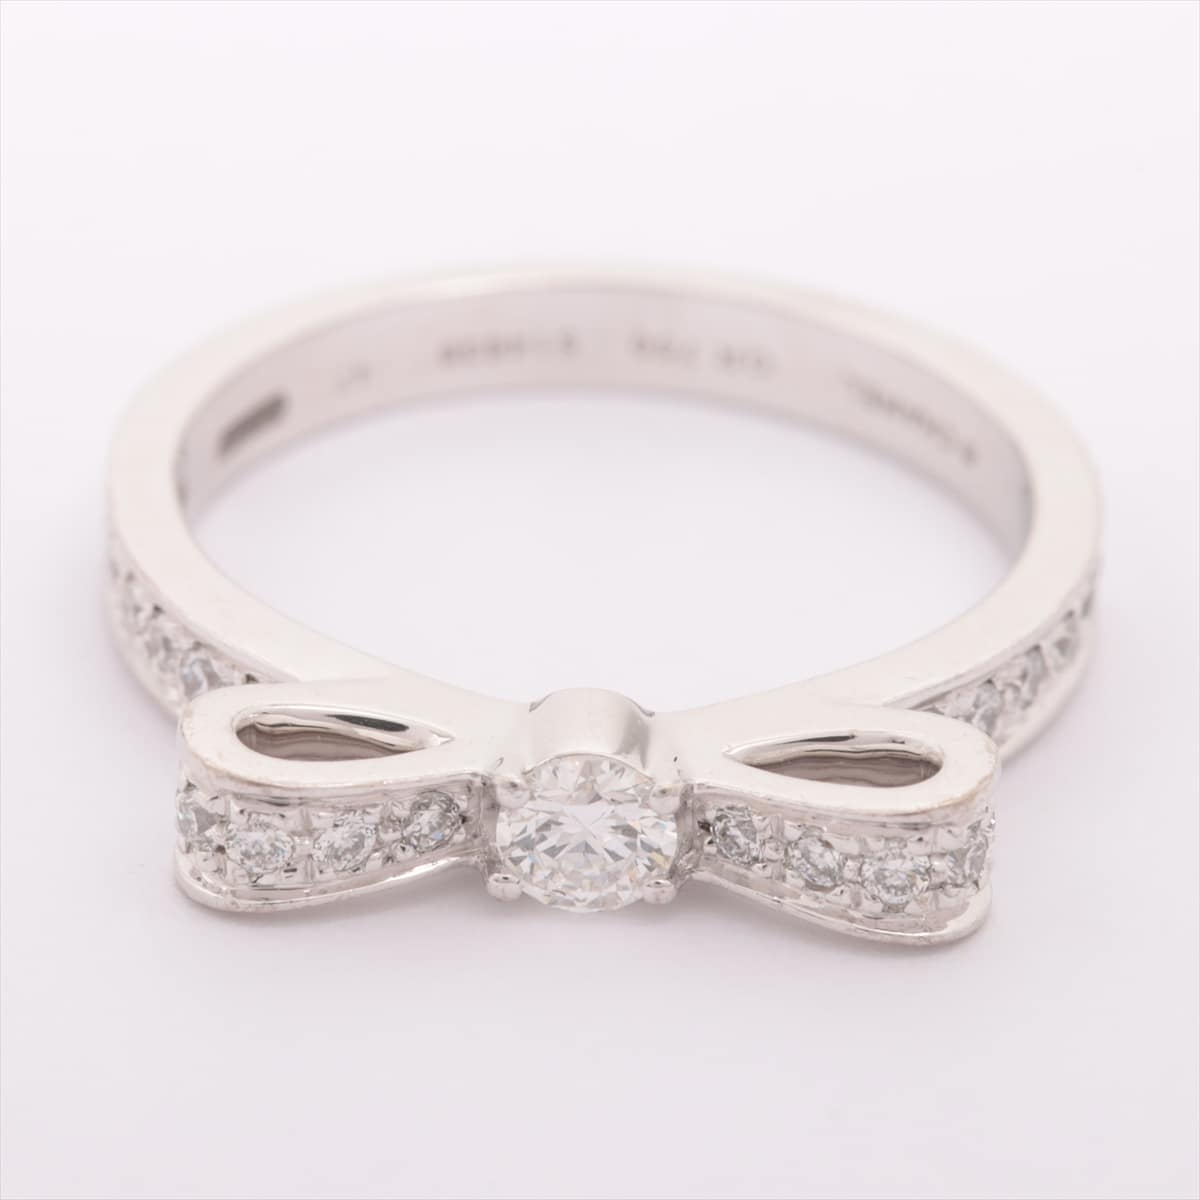 Chanel Ruban Doo Chanel diamond rings 750(WG) 3.0g 47